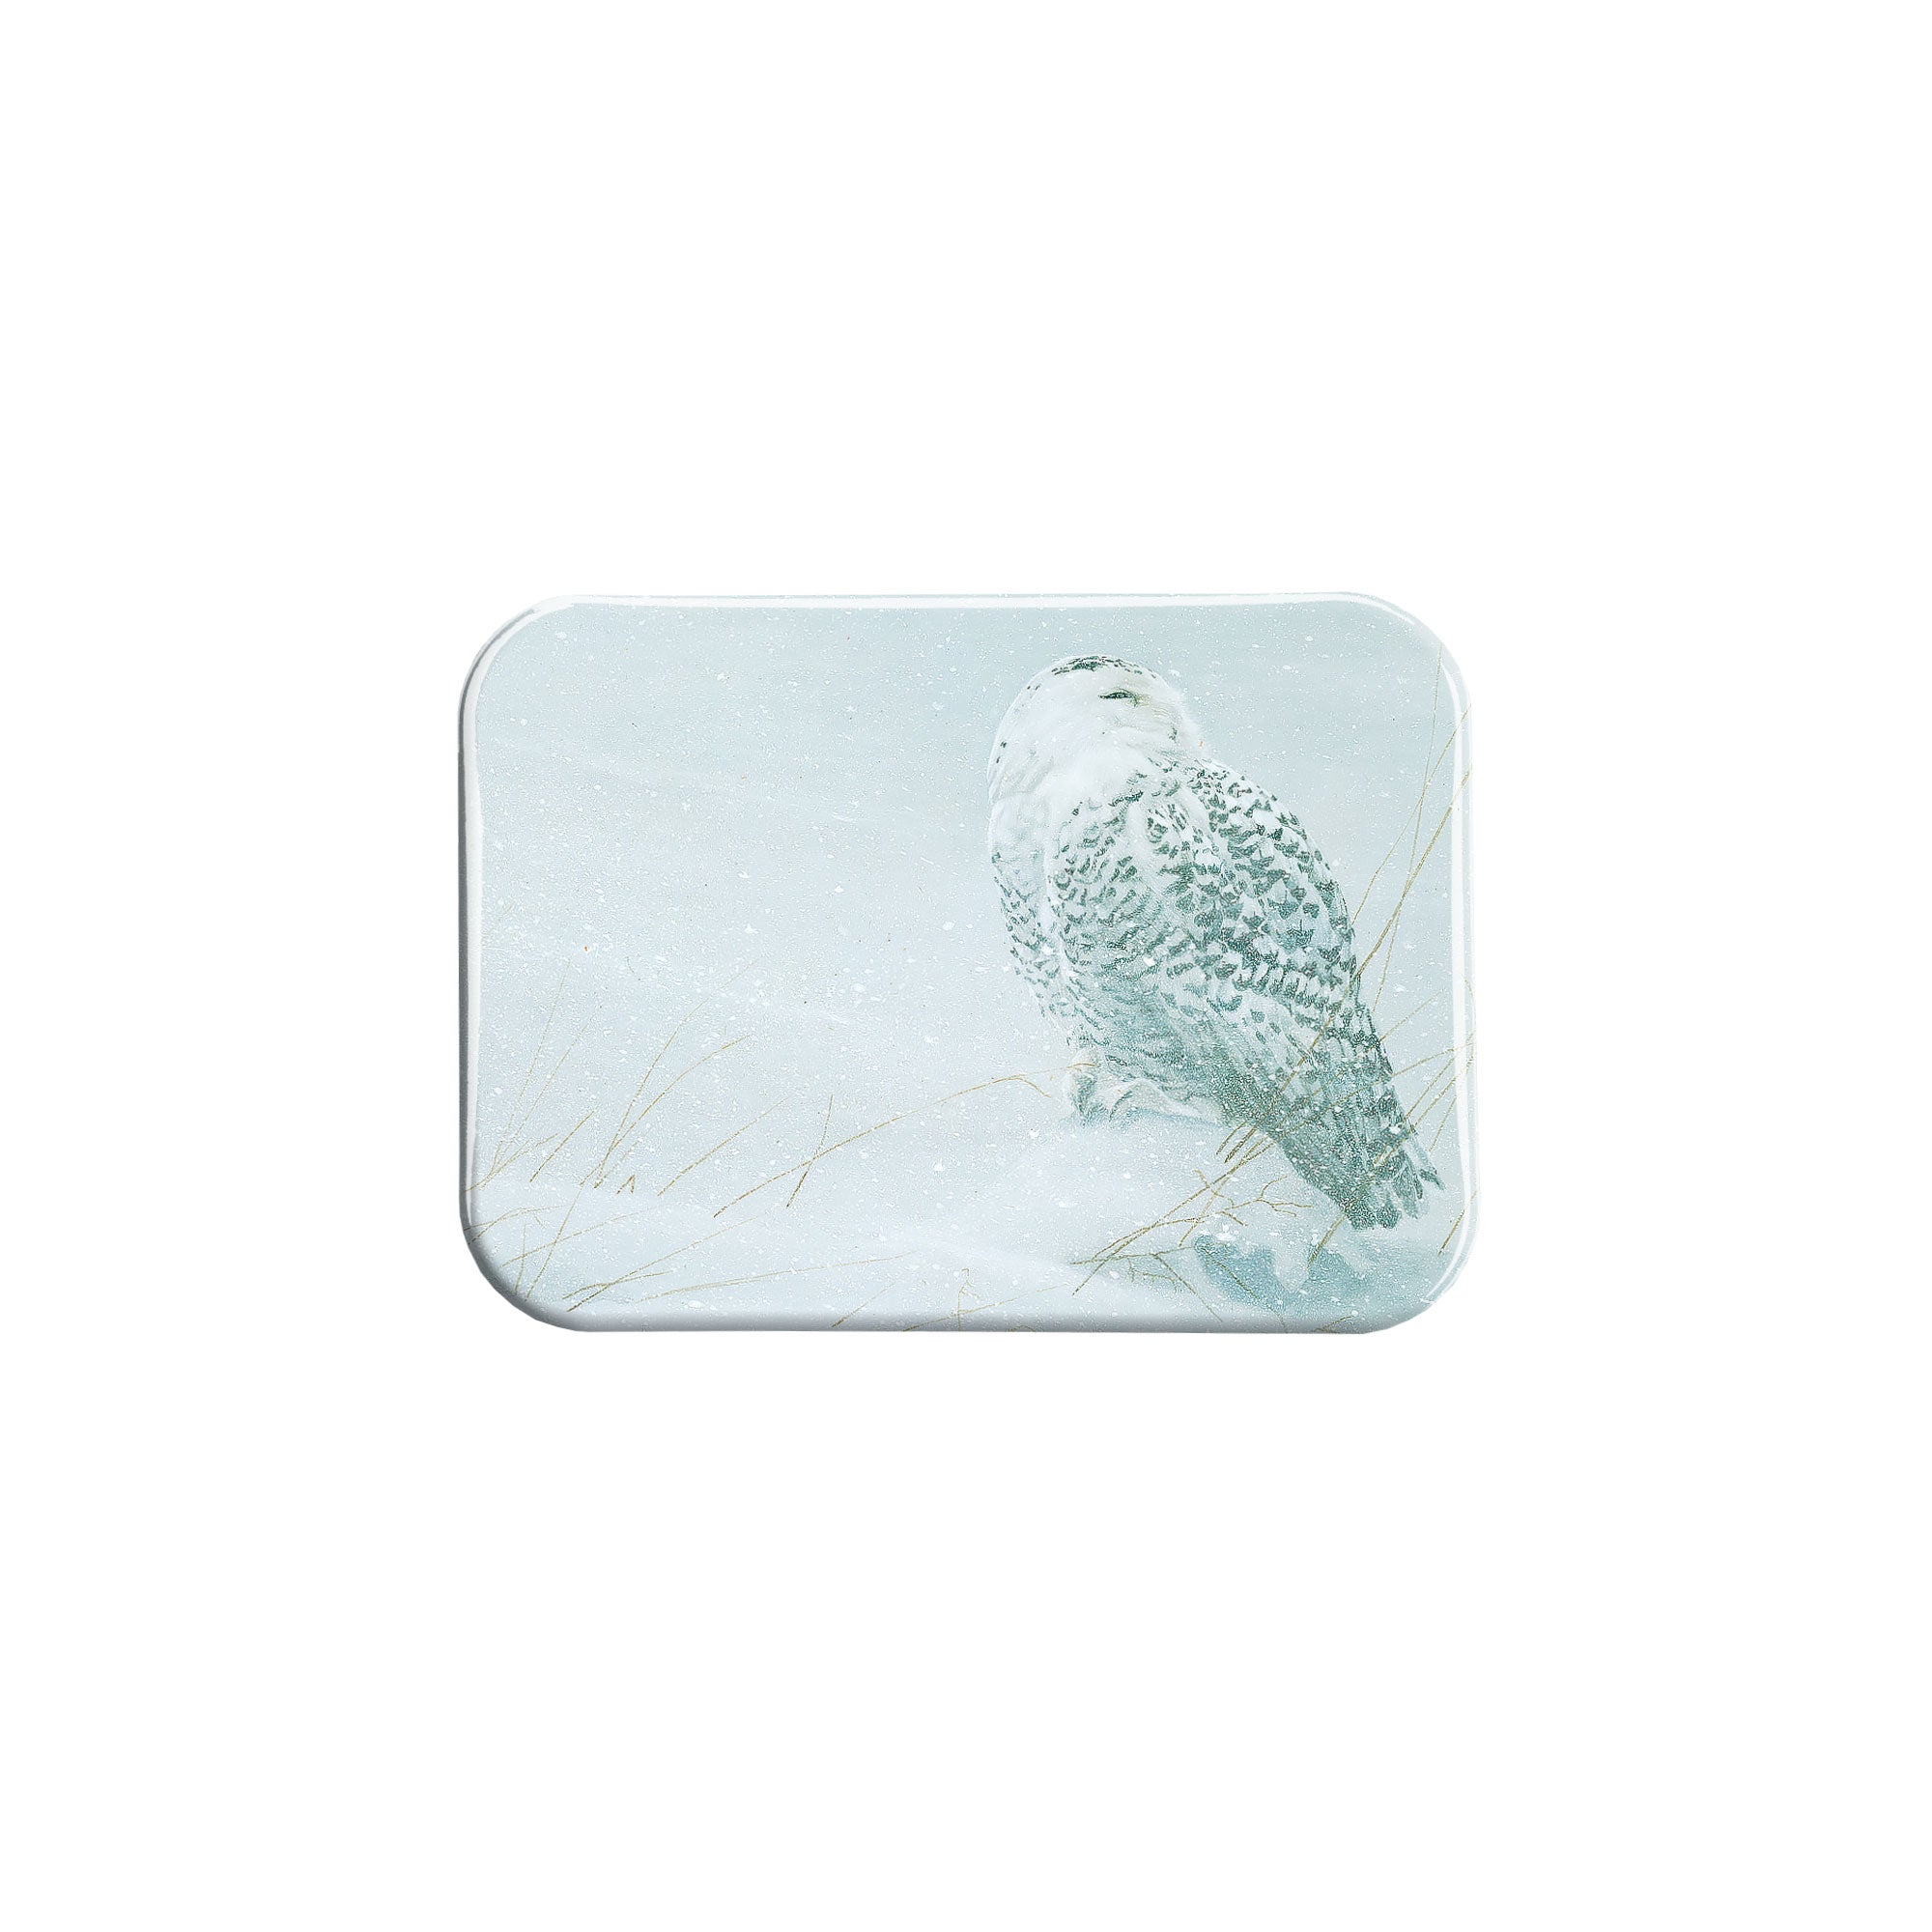 "Snowy Owl" - 2.5" X 3.5" Rectangle Fridge Magnets